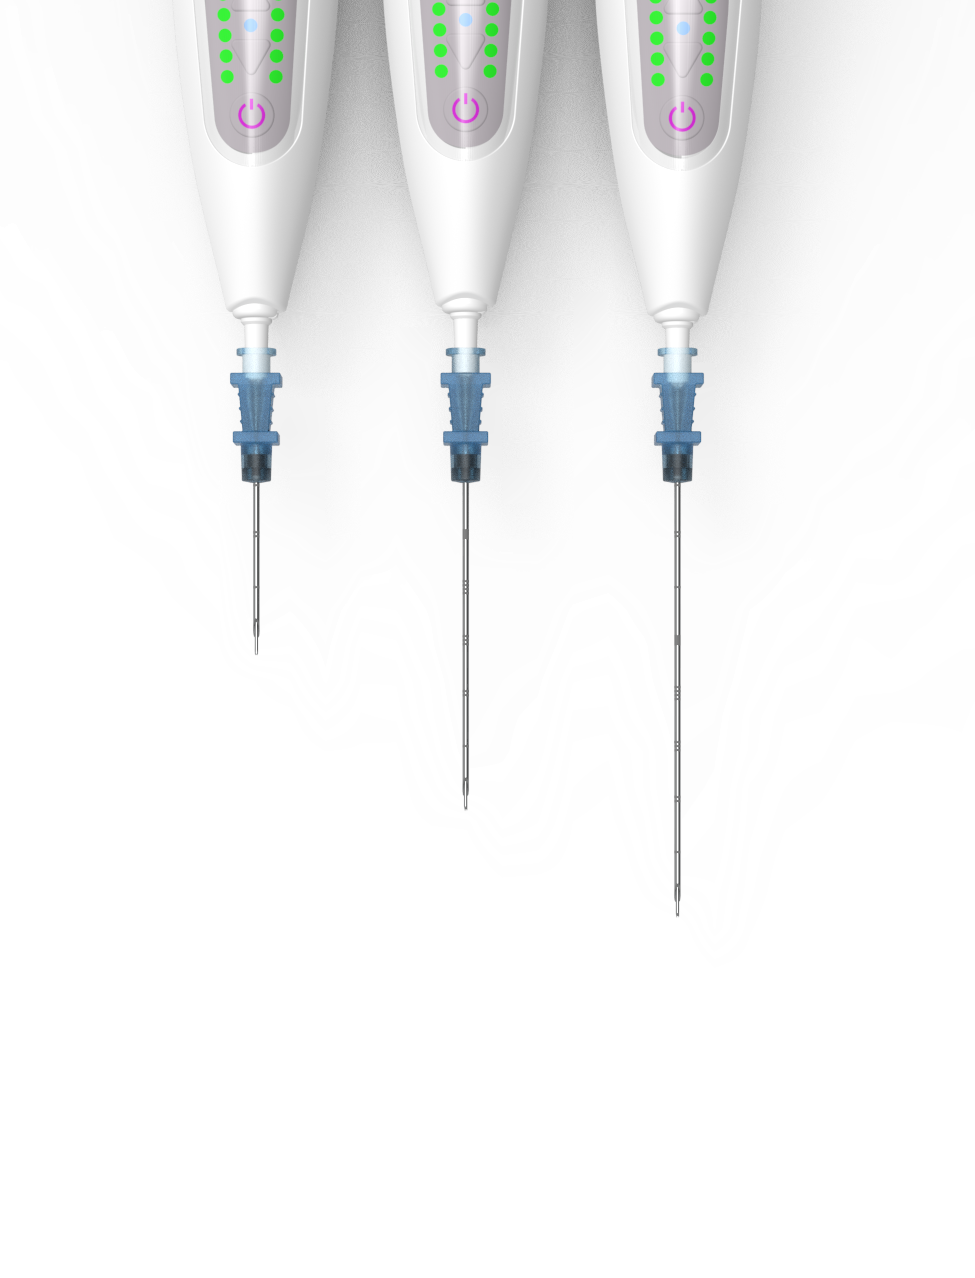 Ocelot needles